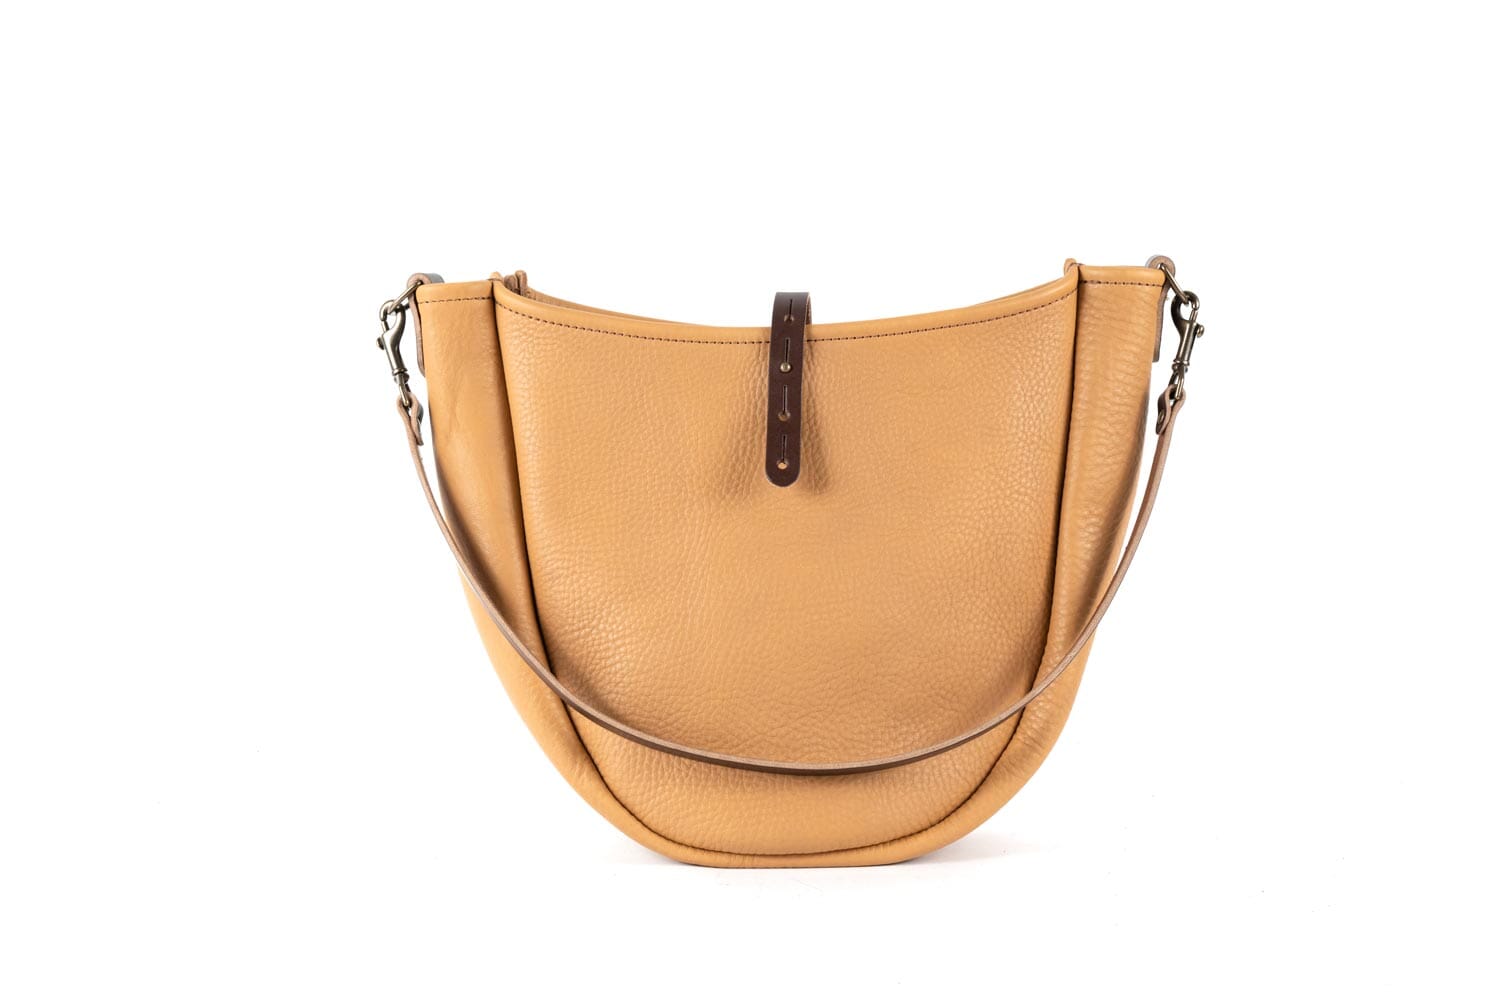 Celeste Leather Hobo Bag - Medium - Tan